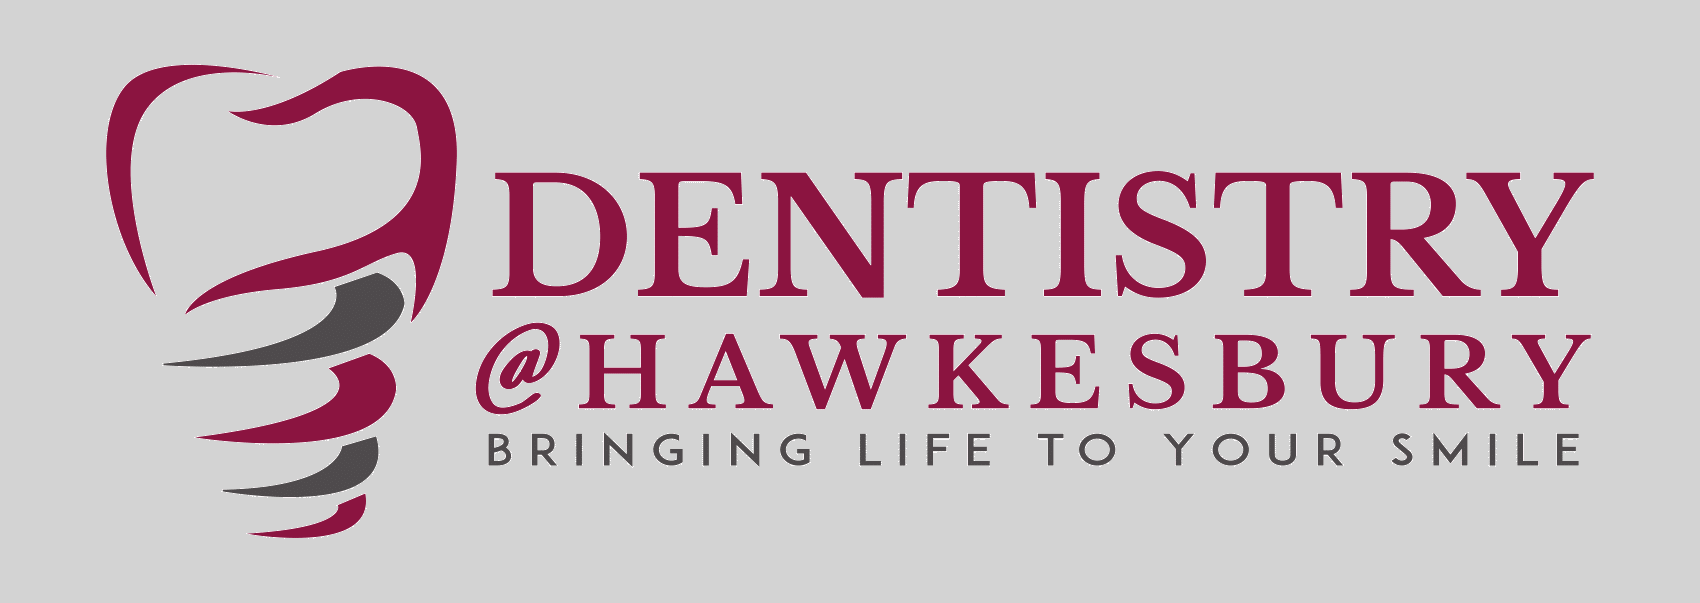 Dentist Dental Services in Hawkesbury